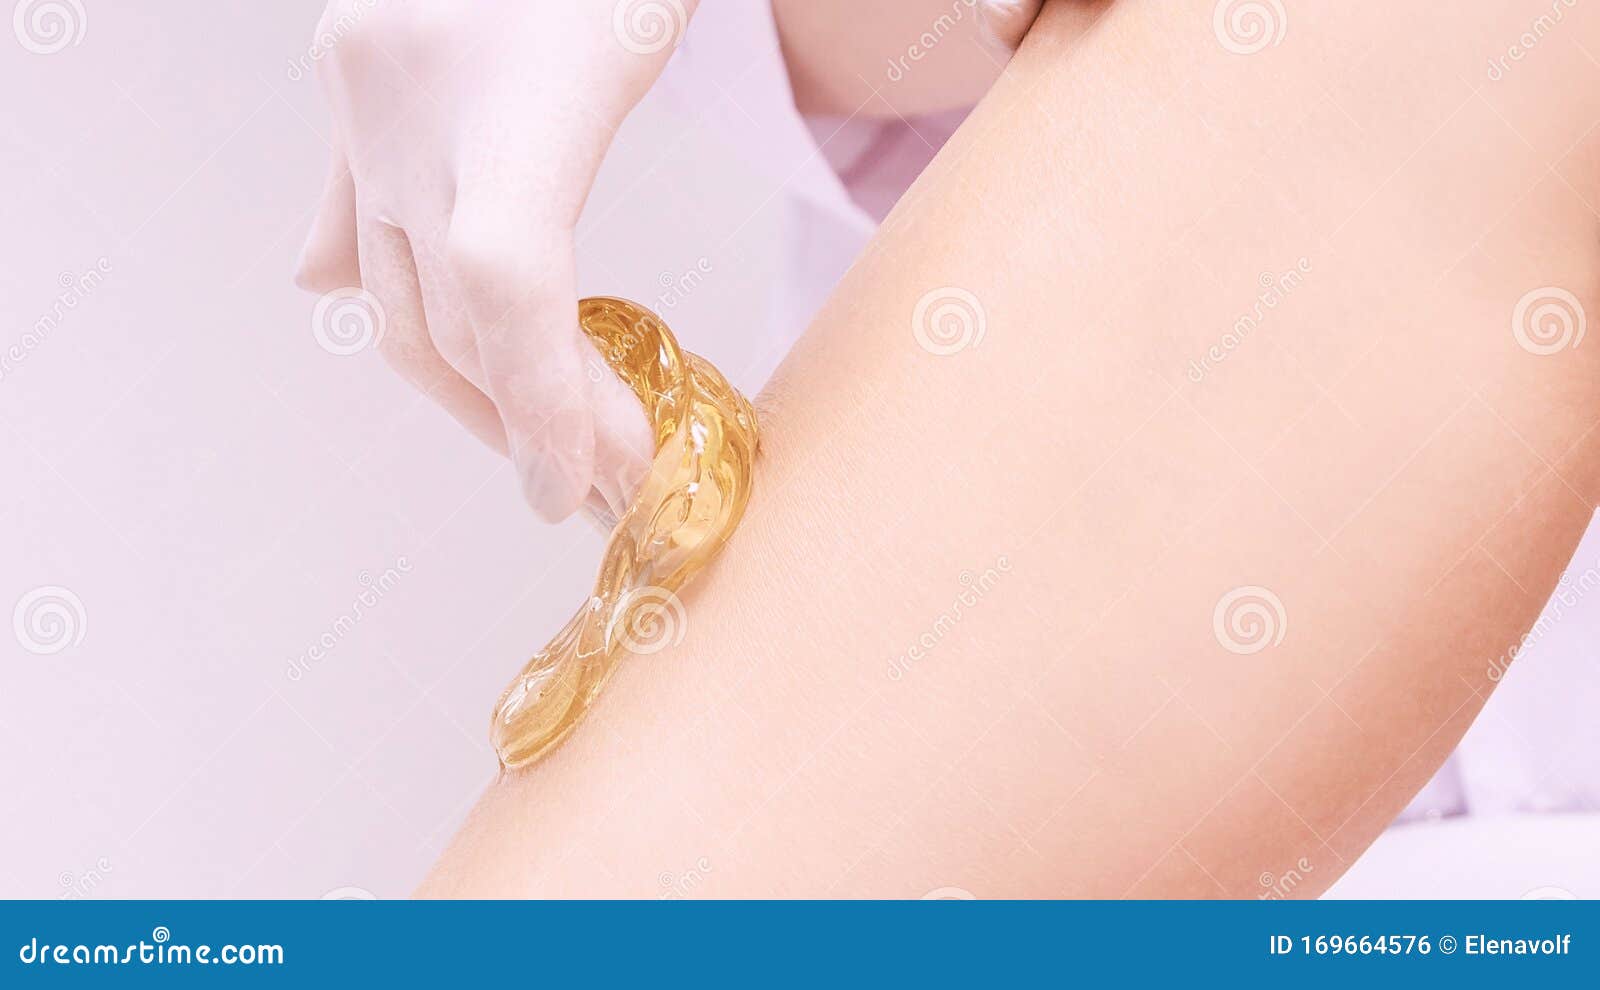 hair removal at spa luxury studio. woman legs wax with shugaring. hot sugar